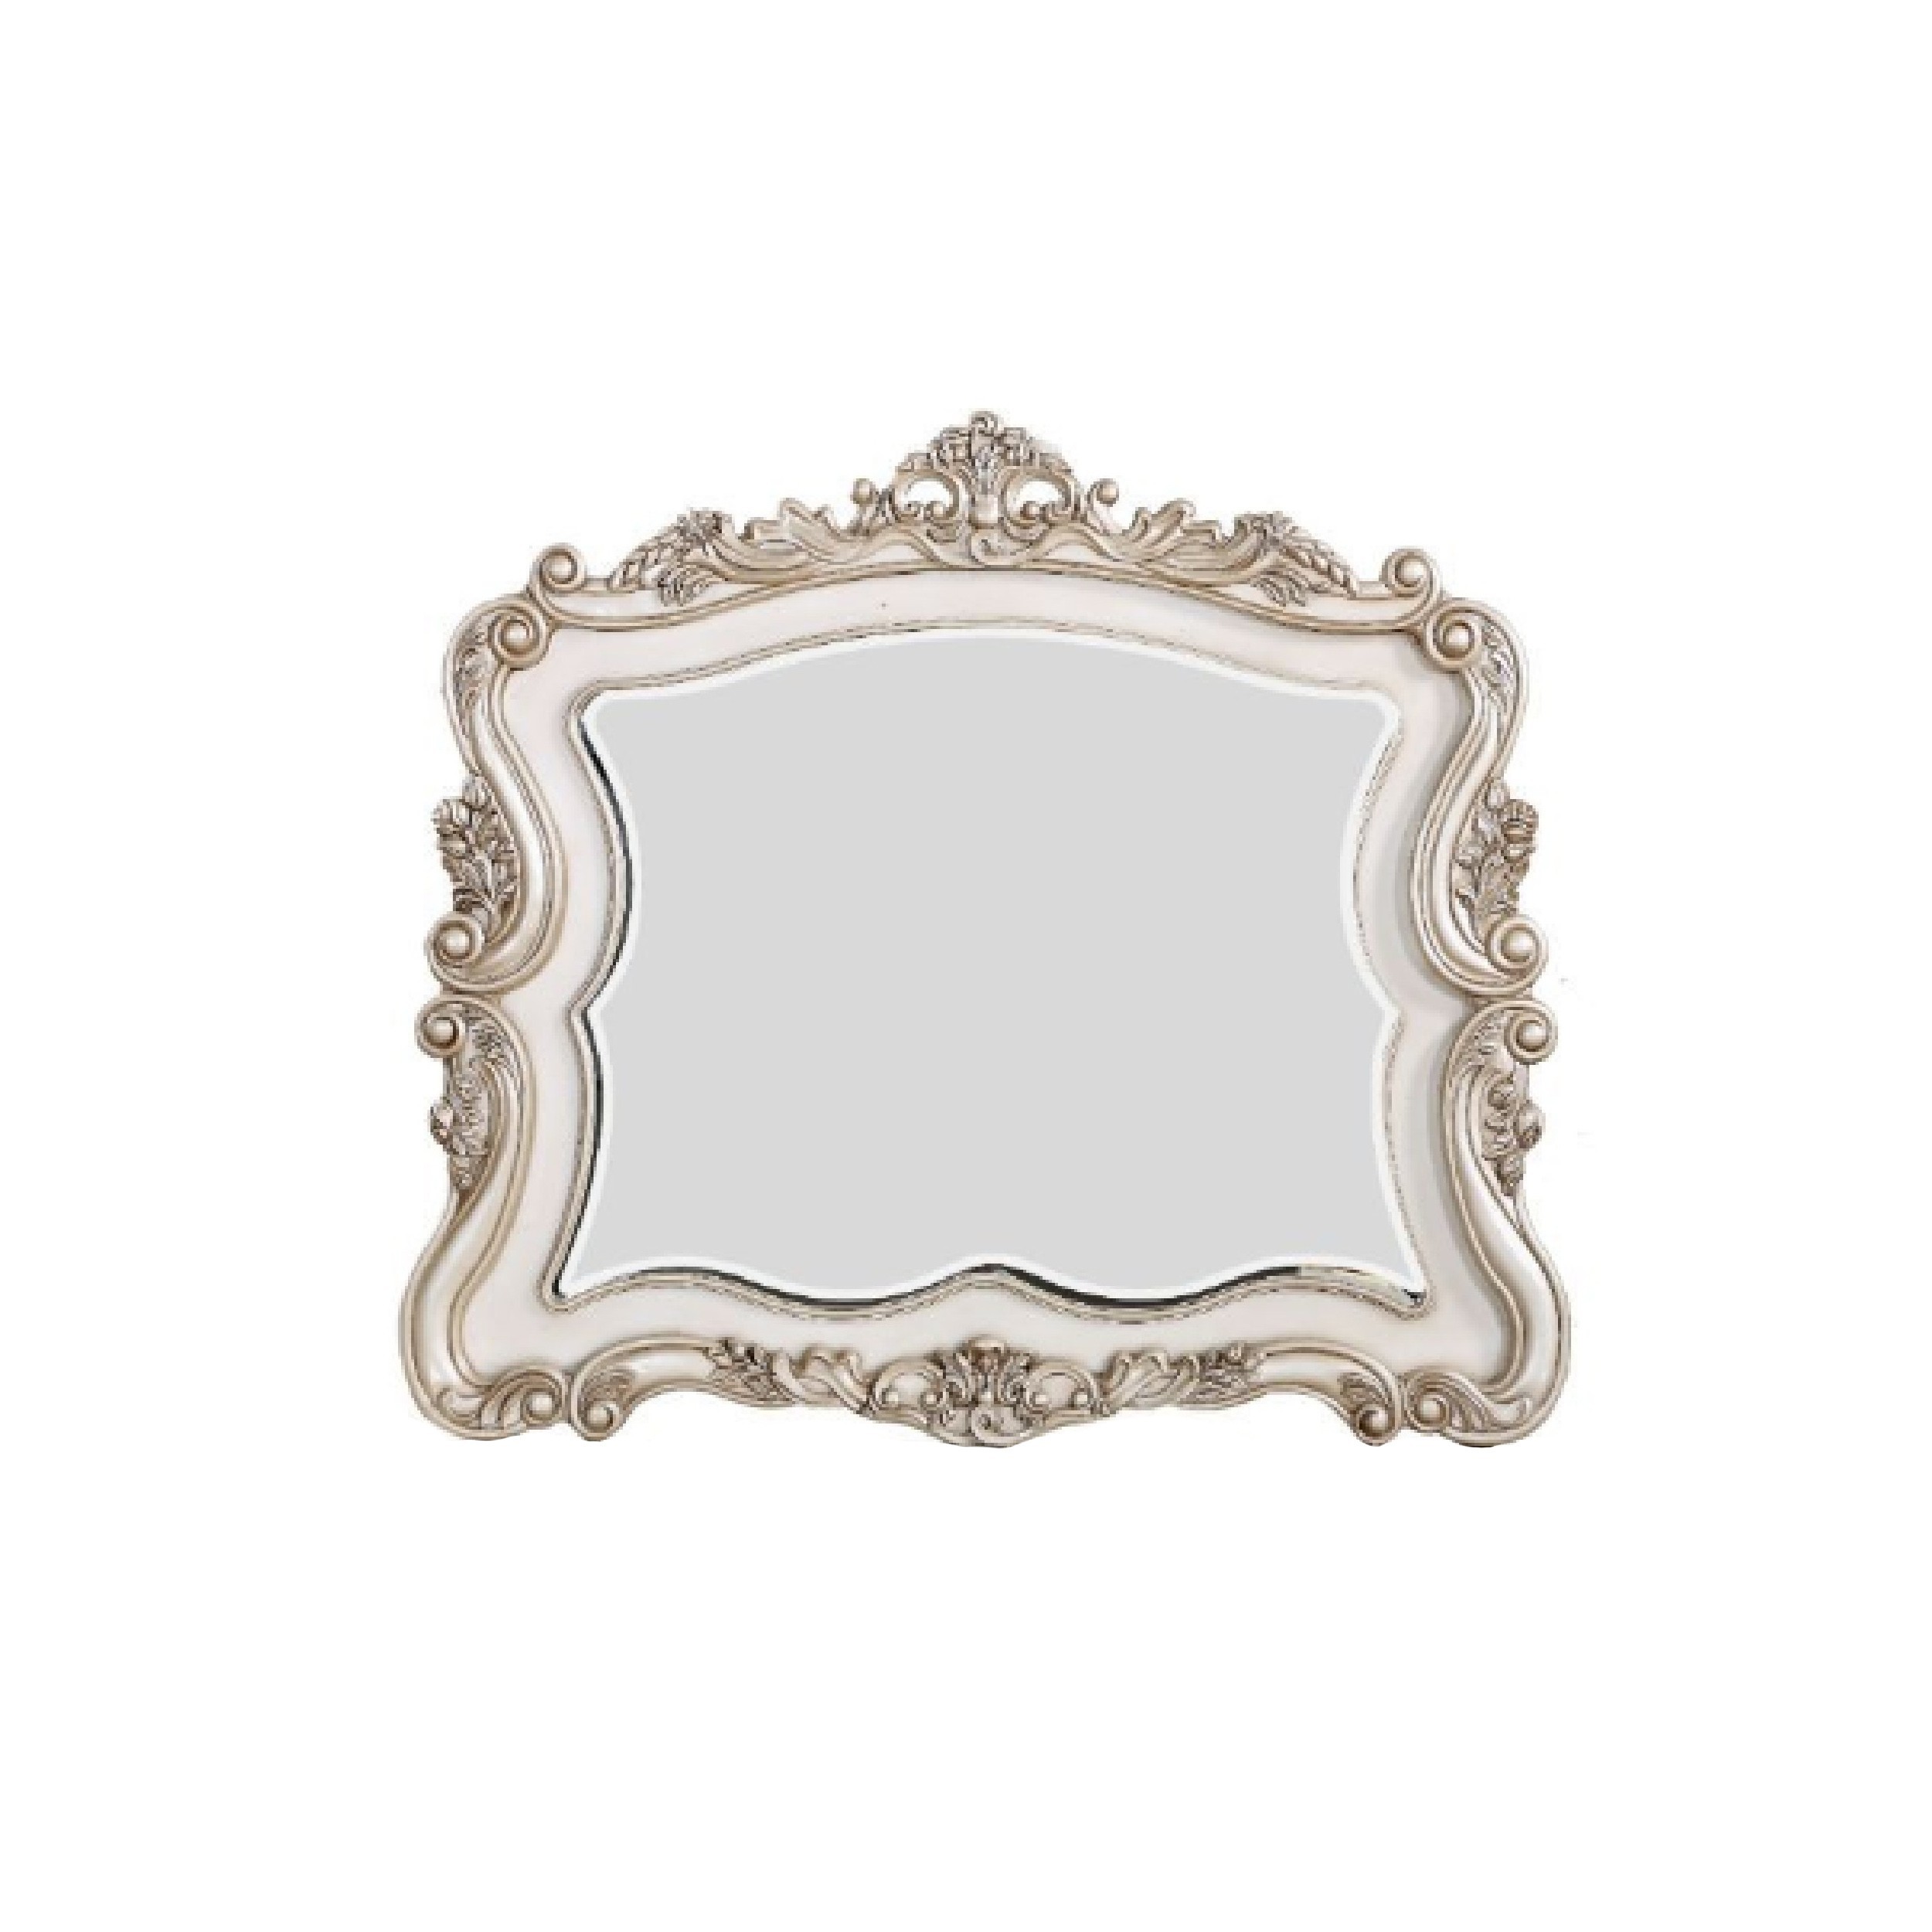 Benjara Saltoro Sherpi 50 Inch Solid Wood Mirror, Scalloped, Scroll Ornate Trim, Antique White- Saltoro Sherpi